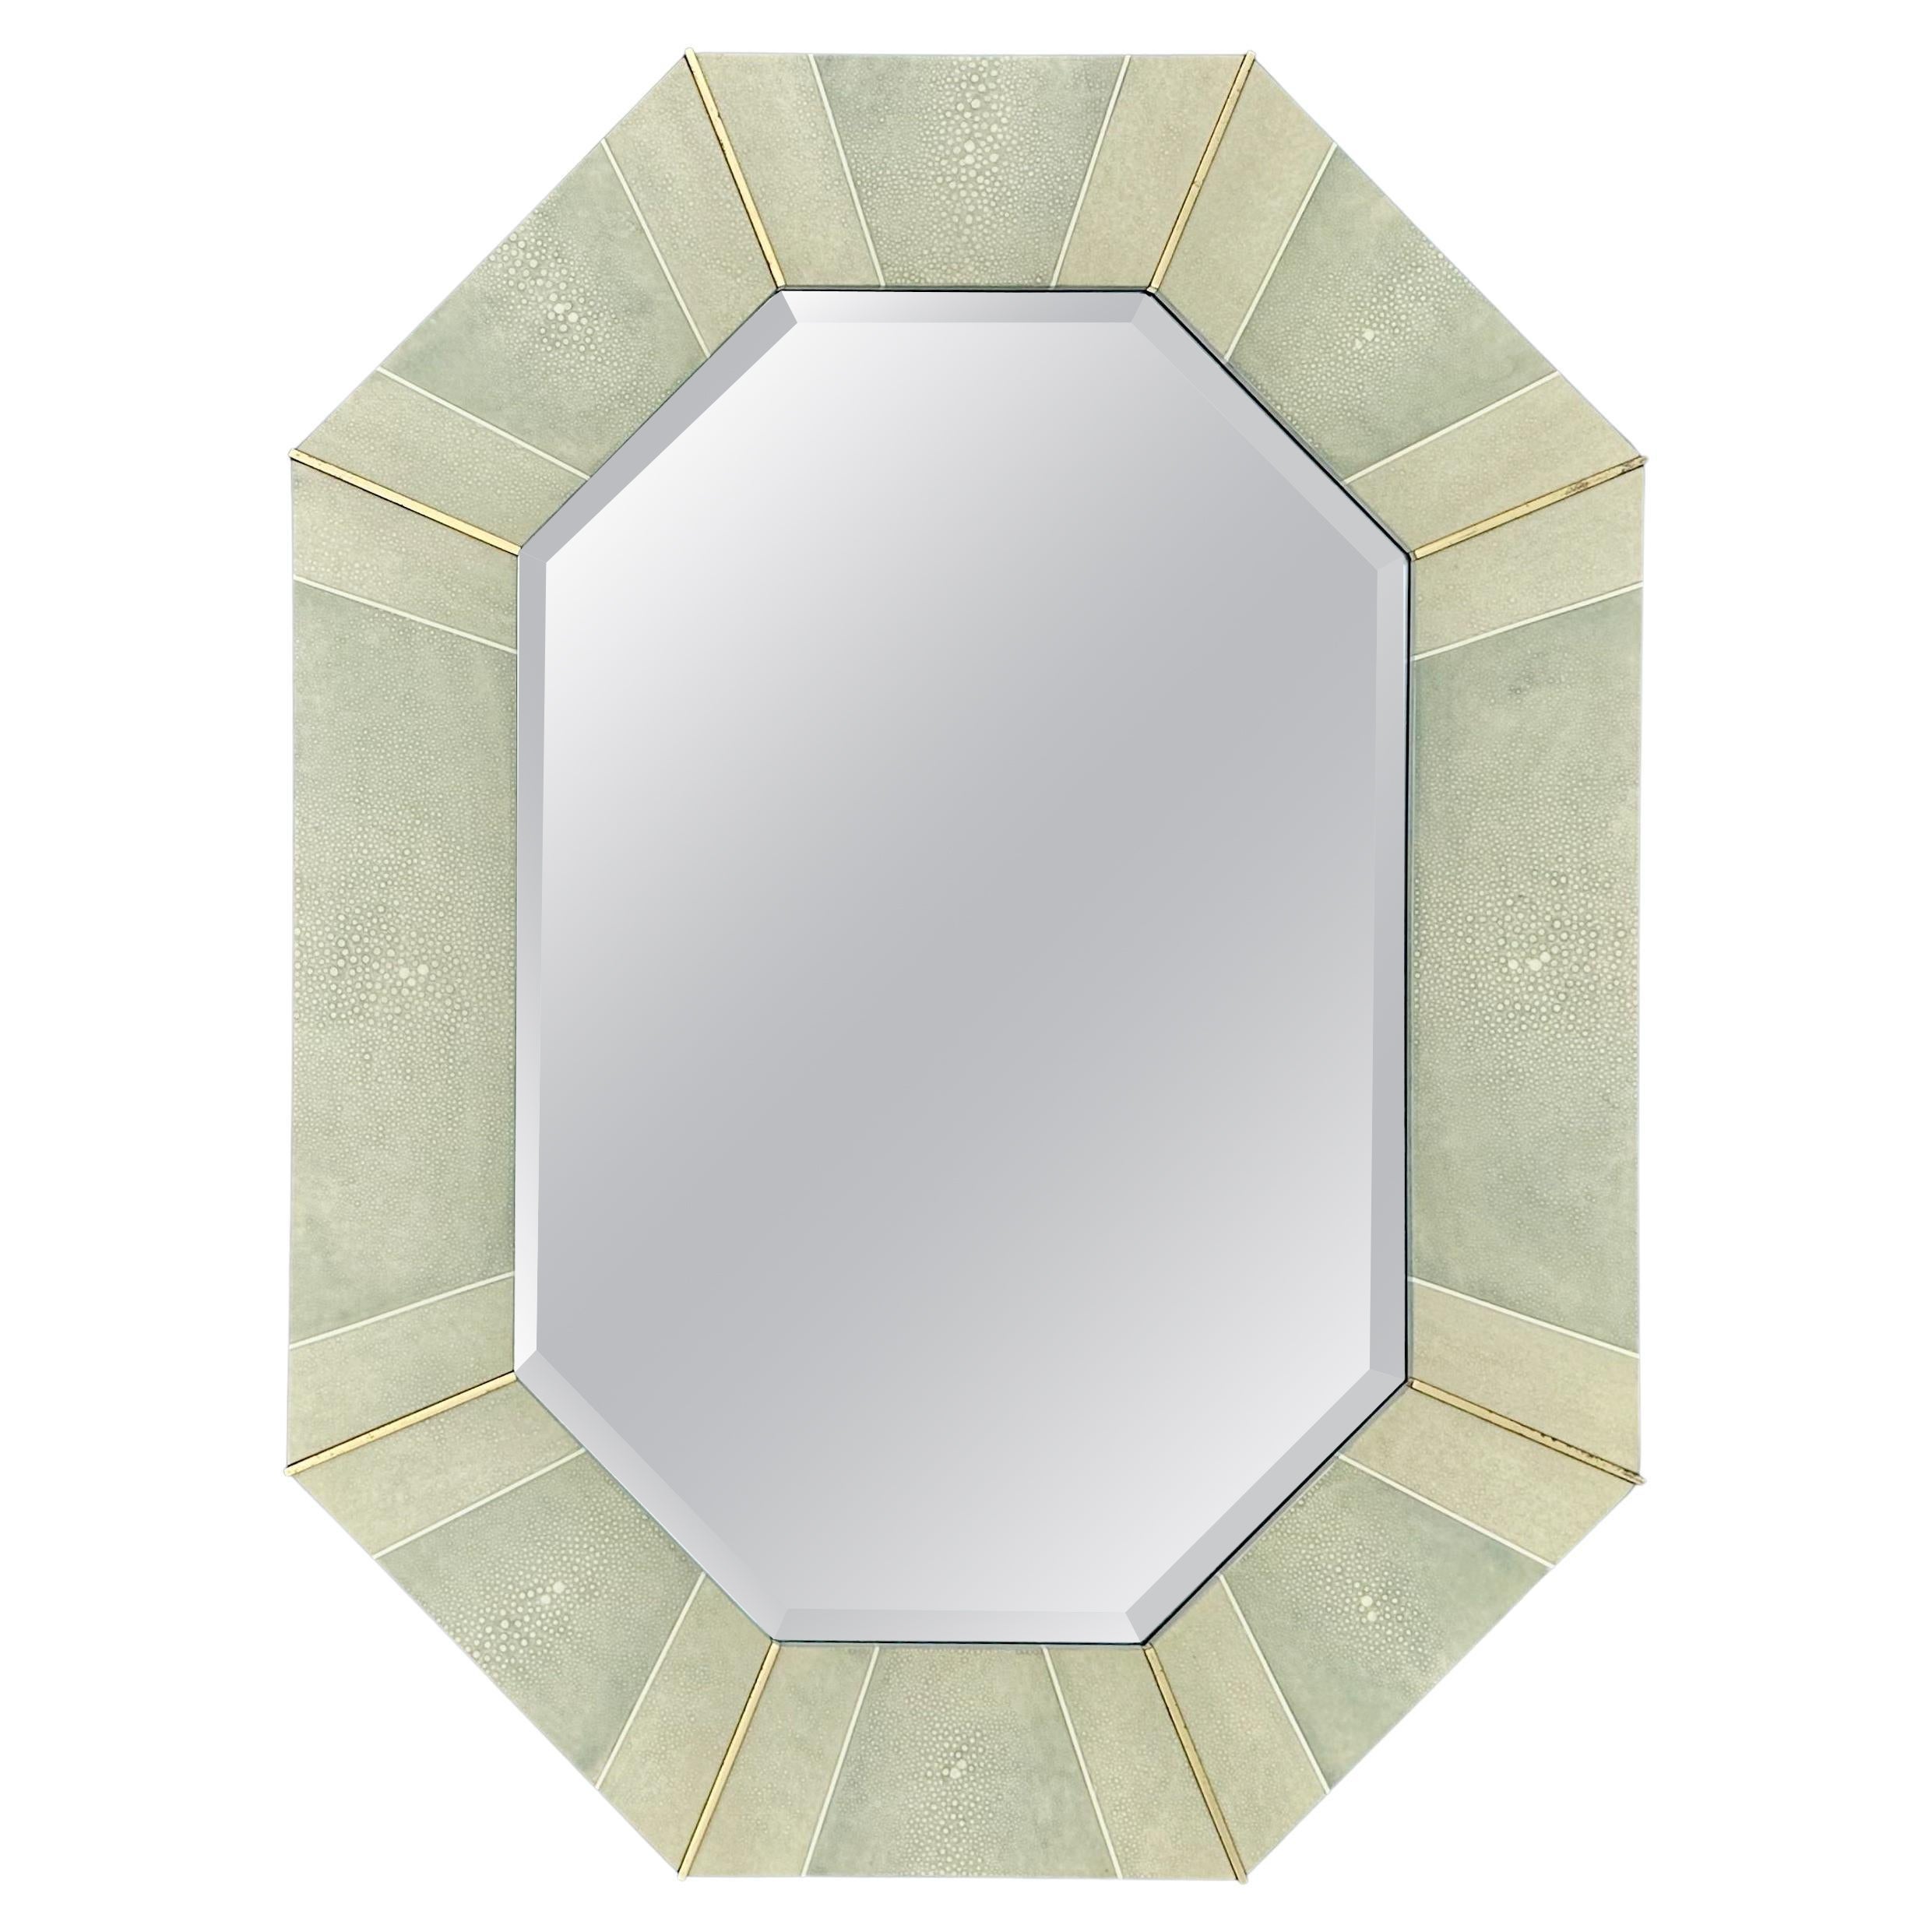 Karl Springer Faux Shagreen 1970's Octagonal Mirror